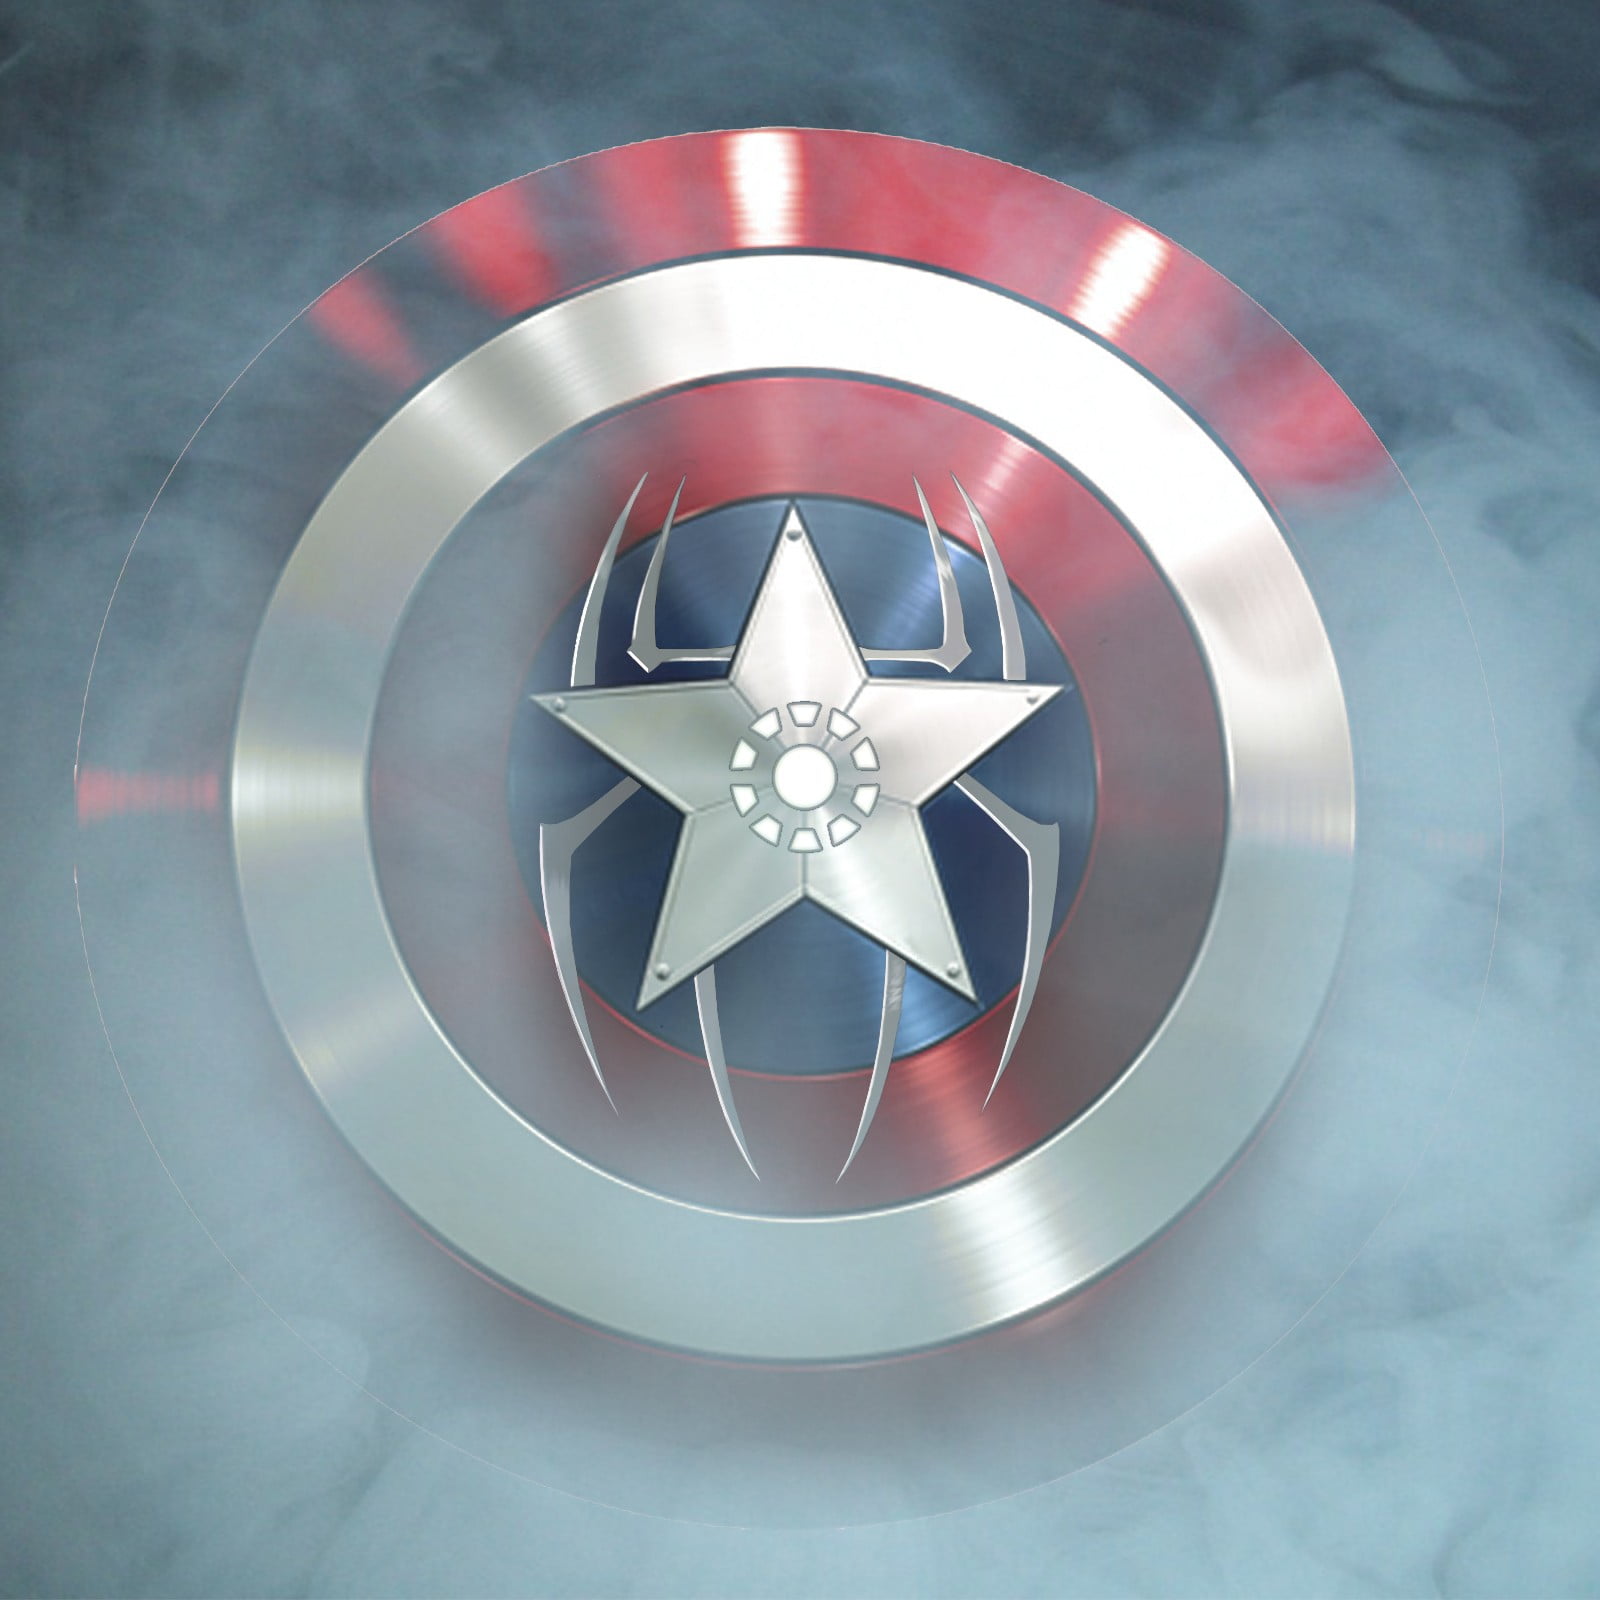 Captain America shield, Marvel Comics, symbols, shape, shiny